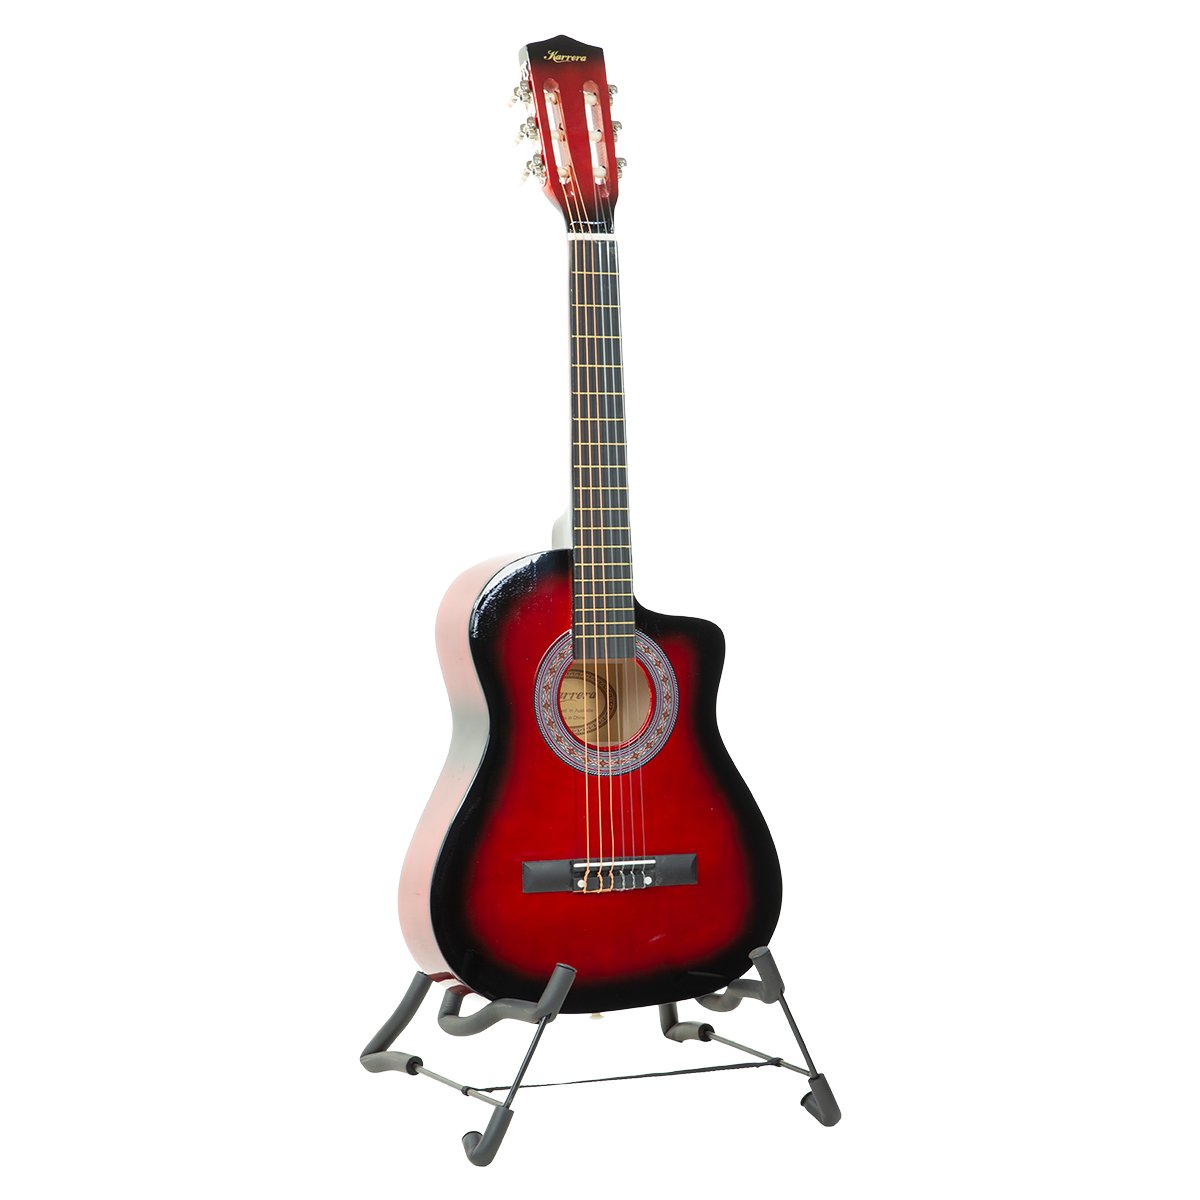 Karrera 38in Pro Cutaway Acoustic Guitar with guitar bag - Red Burst - SILBERSHELL